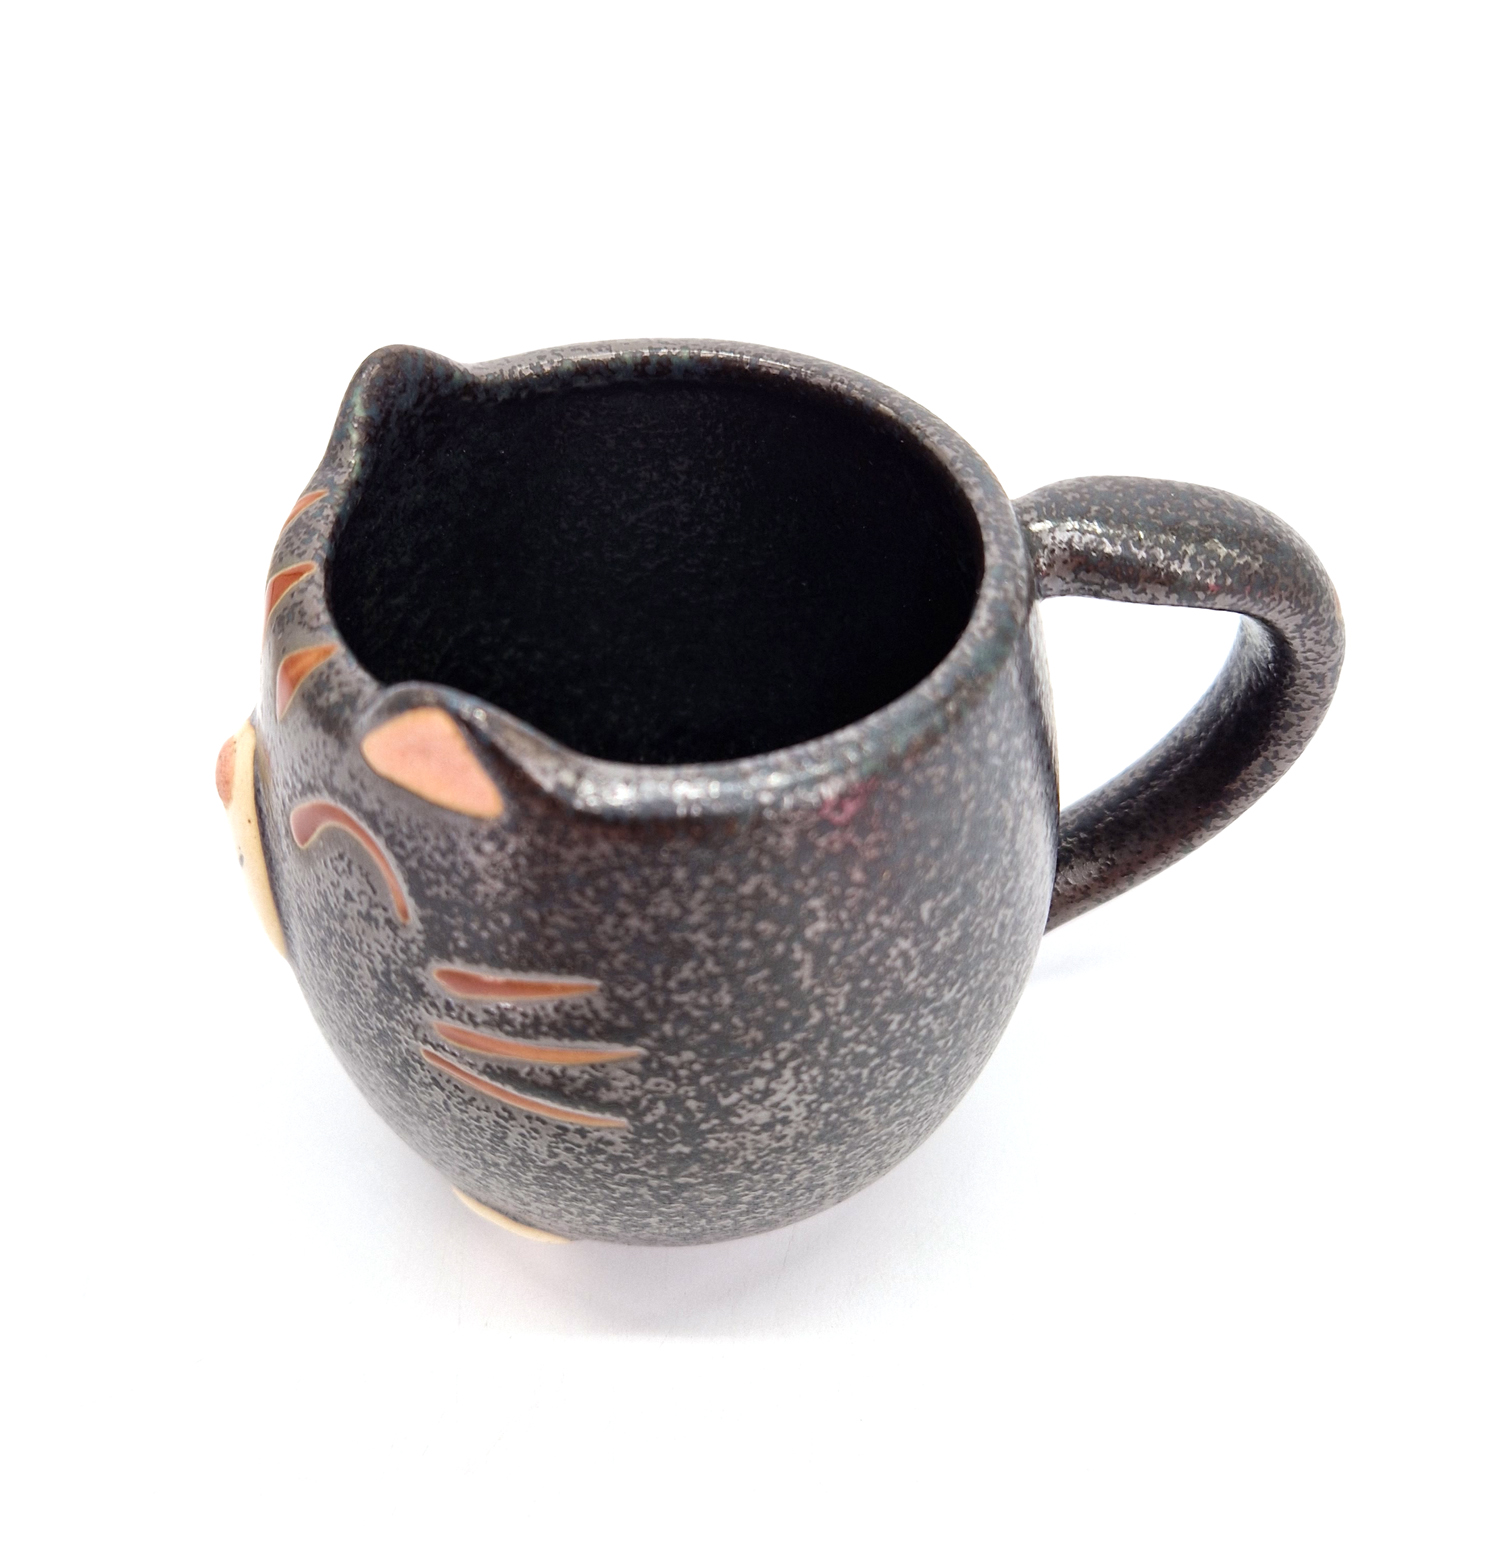 Tazza in ceramica nera giapponese - KURO NEKO - cat